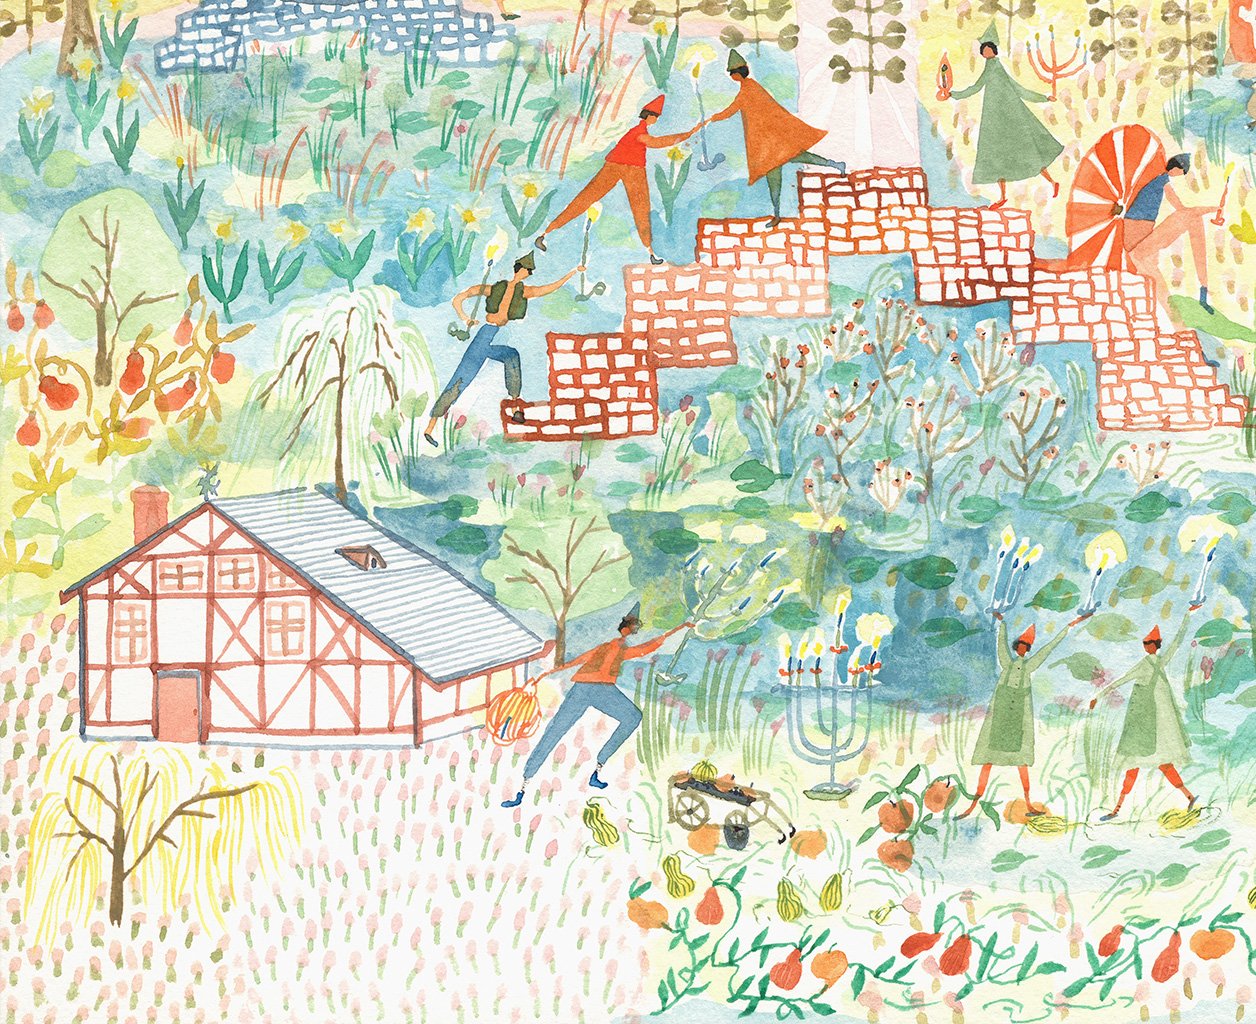   Lantern Festival, detail   Watercolor on paper, 2021  11” x 14”  Sold 